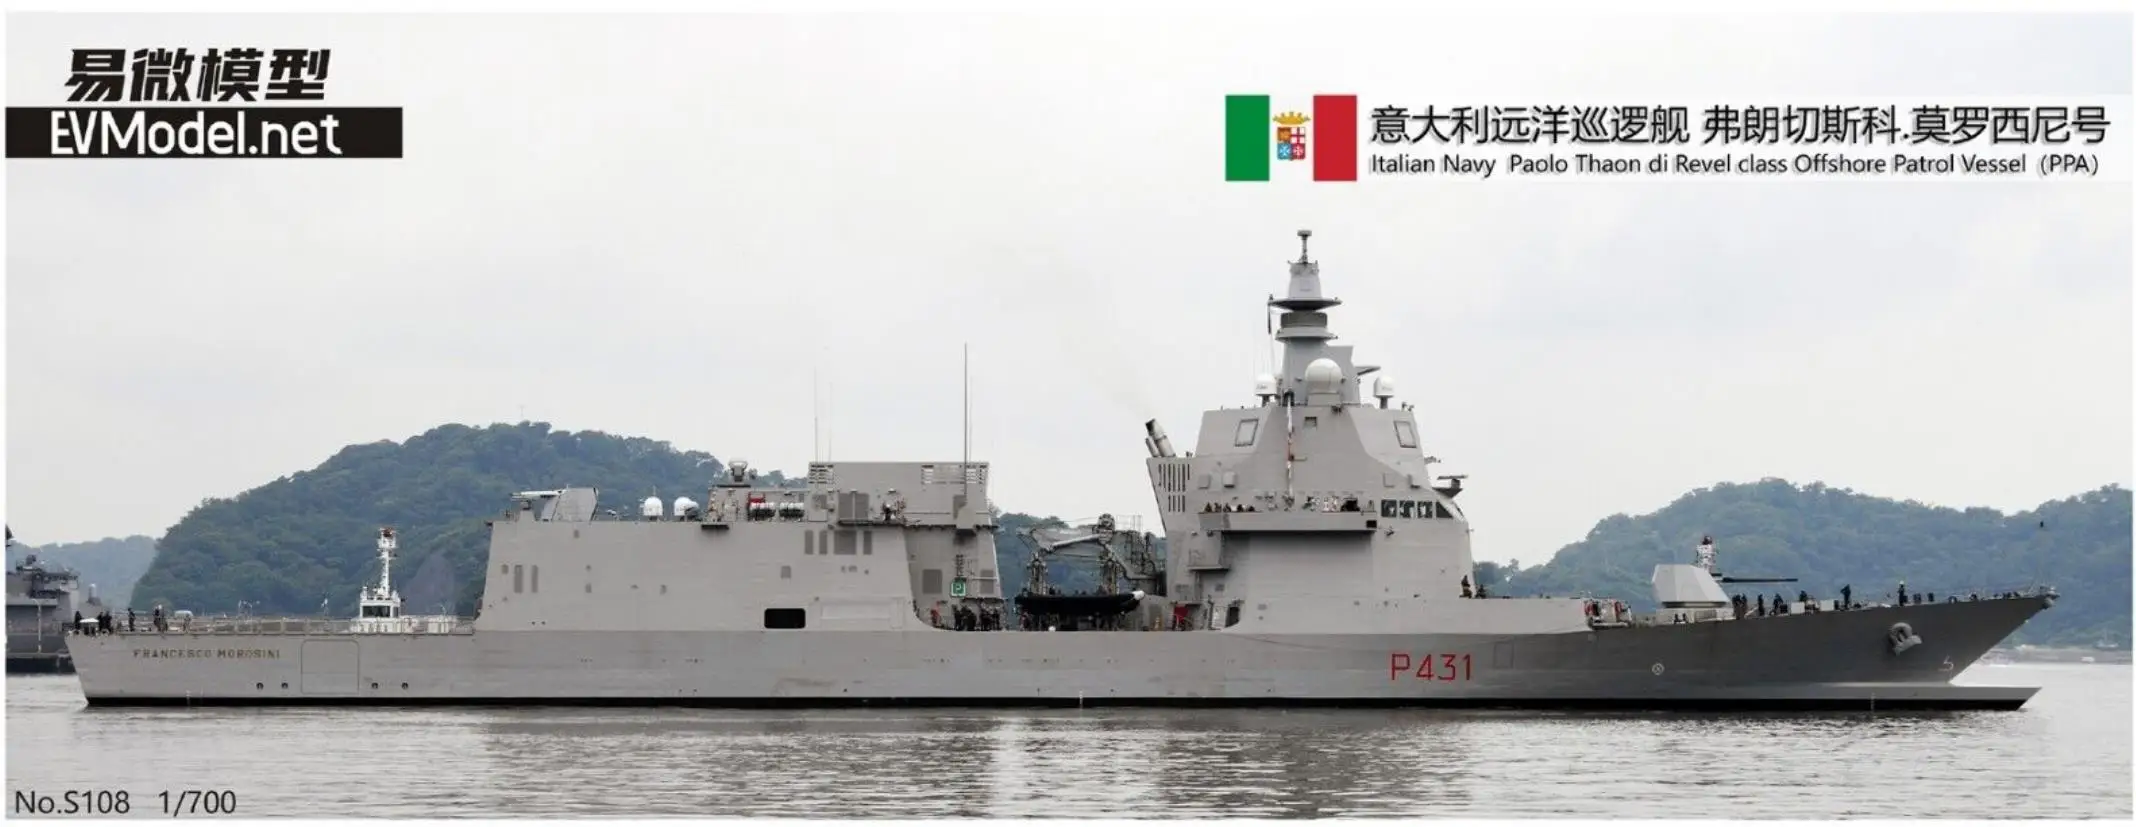 

EVMODEL S108 1/700 Italian Navy Paolo Thaon di Revel class Offshore Patrol(PPA)